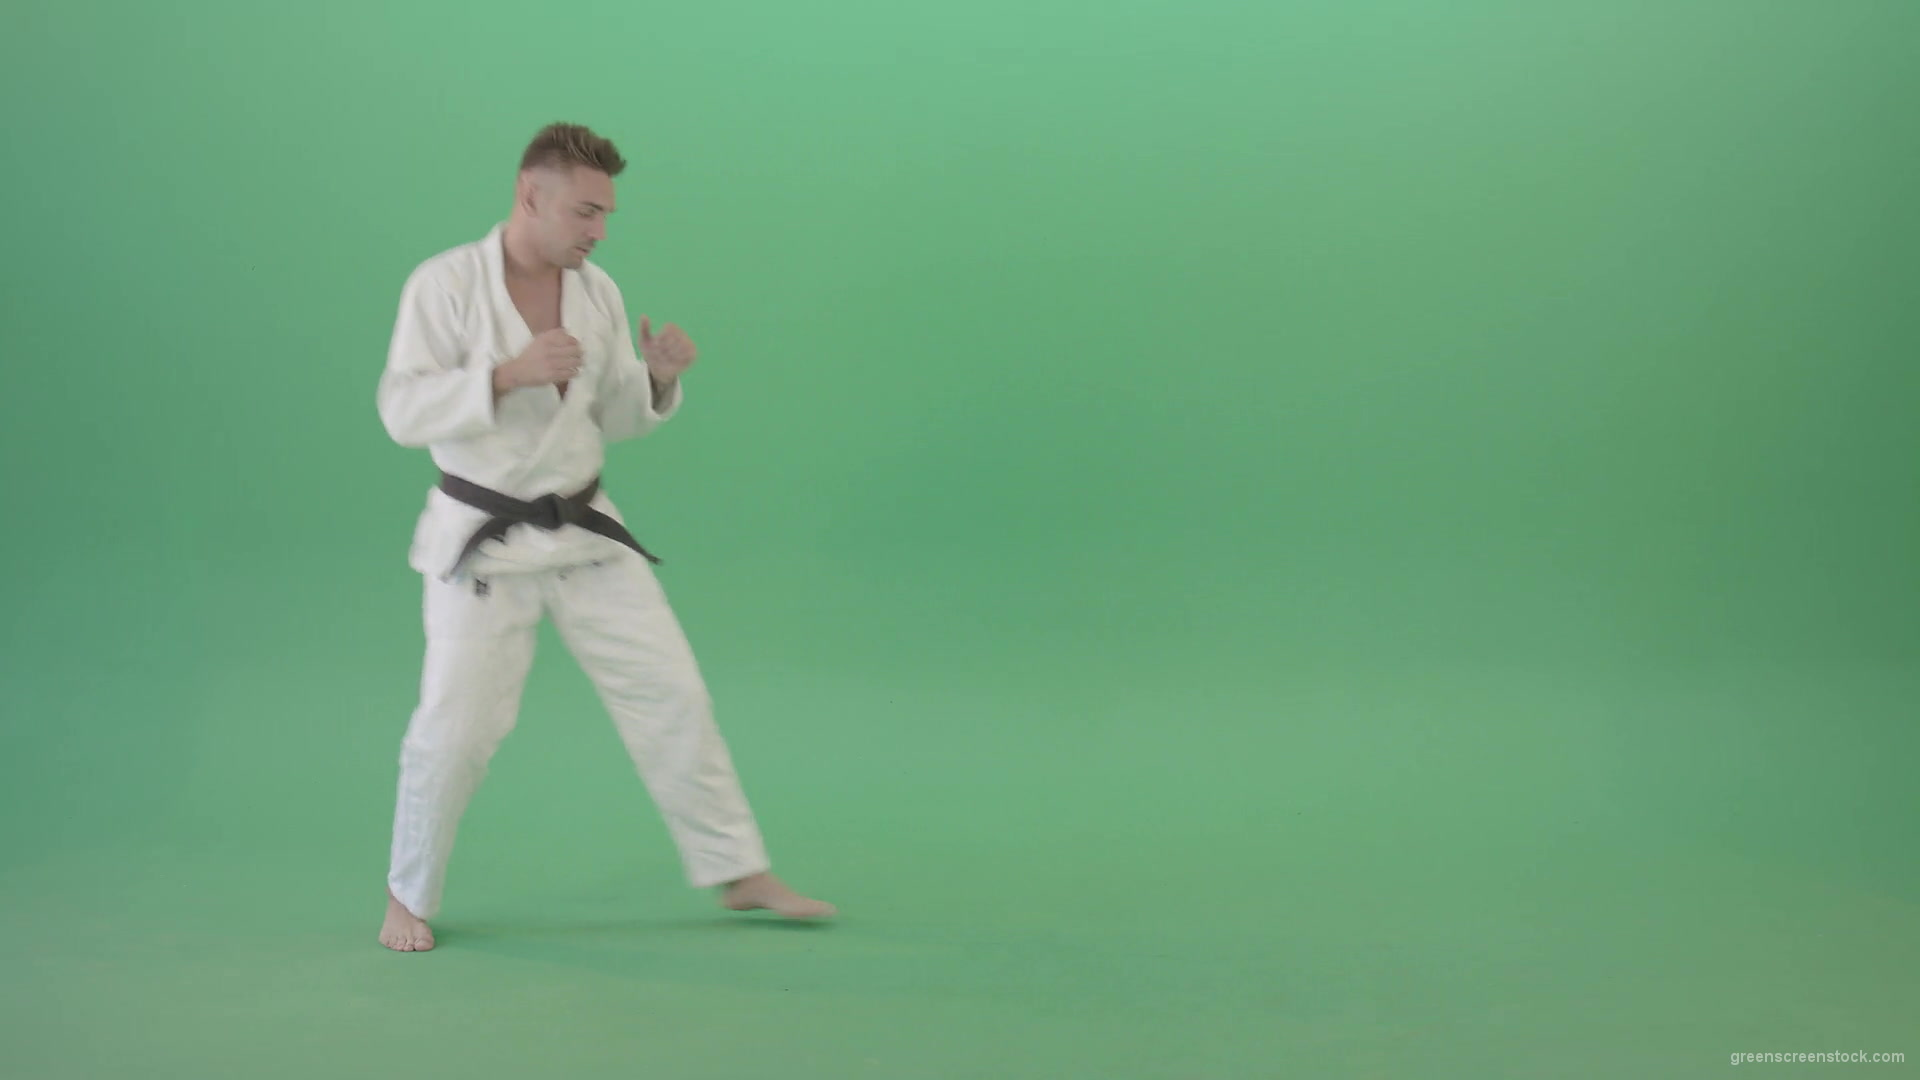 Jujutsu-Sportman-training-isolated-on-green-screen-4K-Video-Footage-1920_006 Green Screen Stock